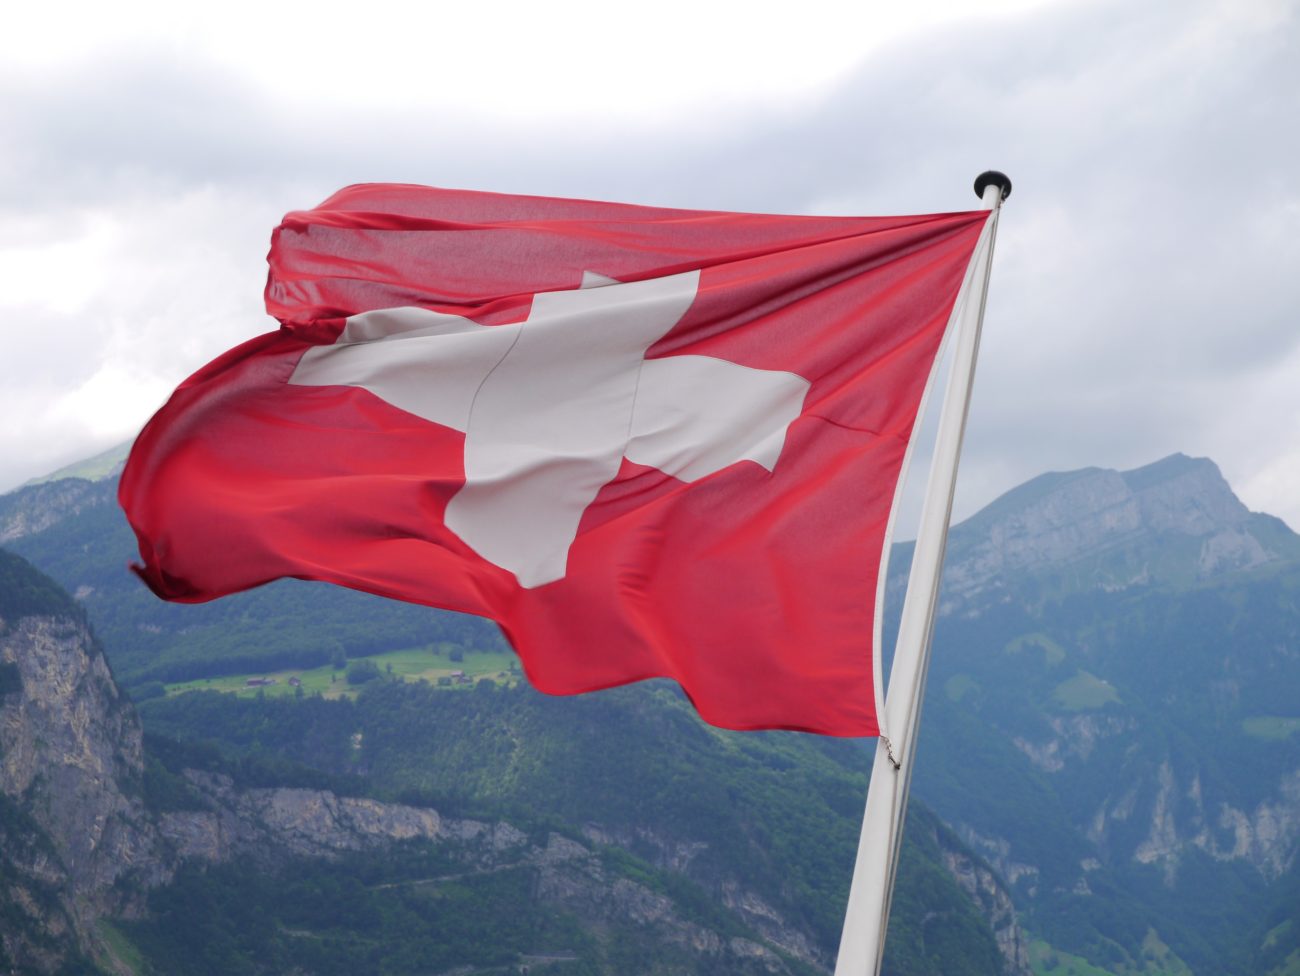 Swiss regulator Gespa appoints Cina as president